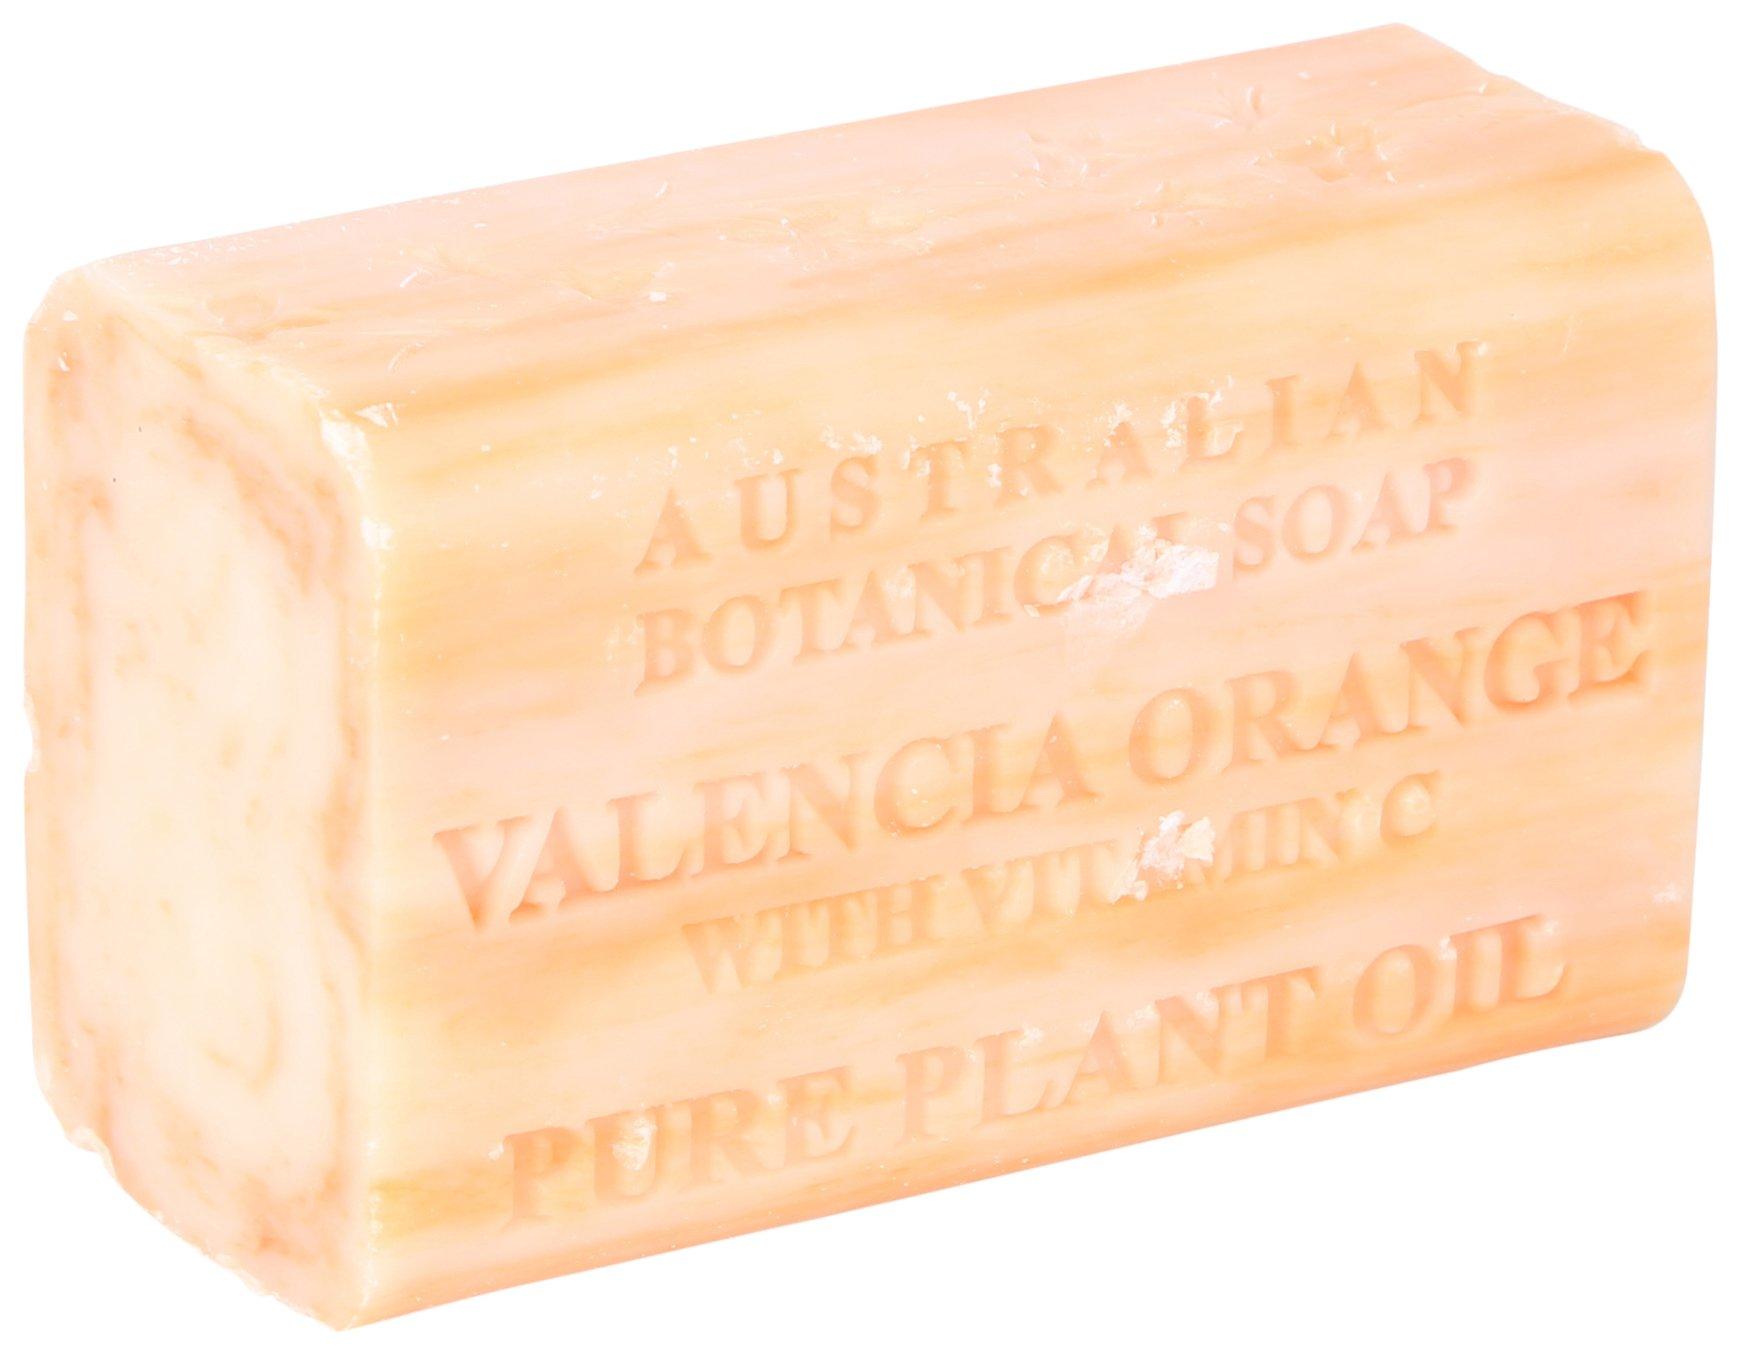 6.6 Oz. Valencia Orange Bar Soap